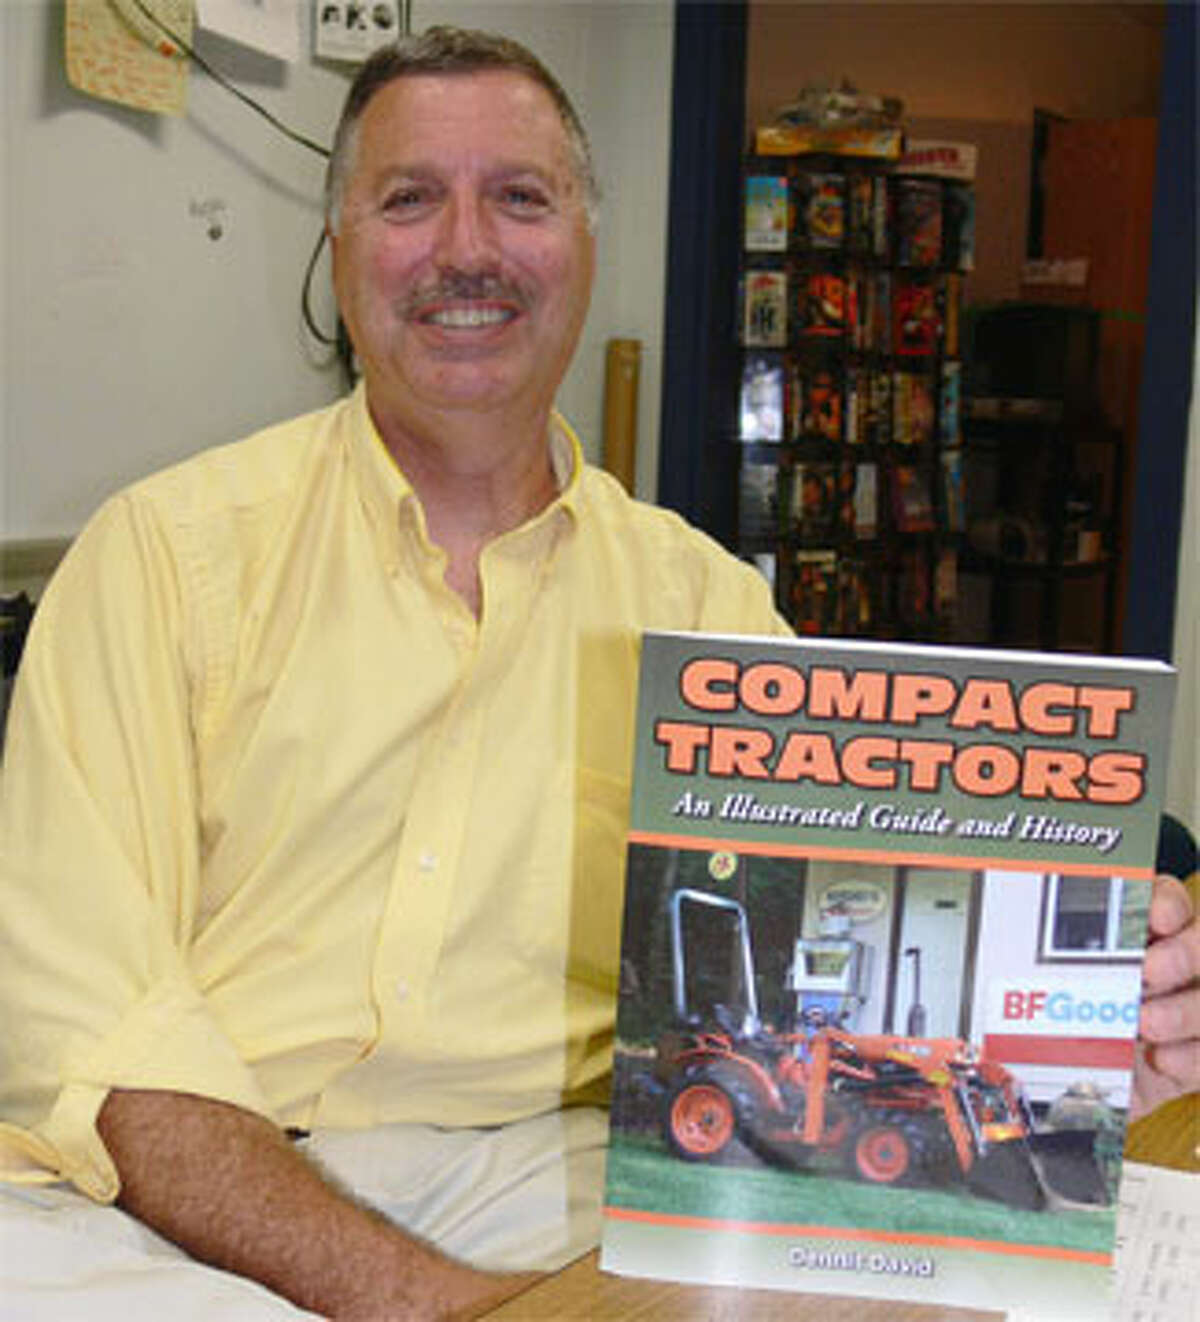 Dennis David, a technology teacher at Shelton Intermediate School, has written a new book about compact tractors.